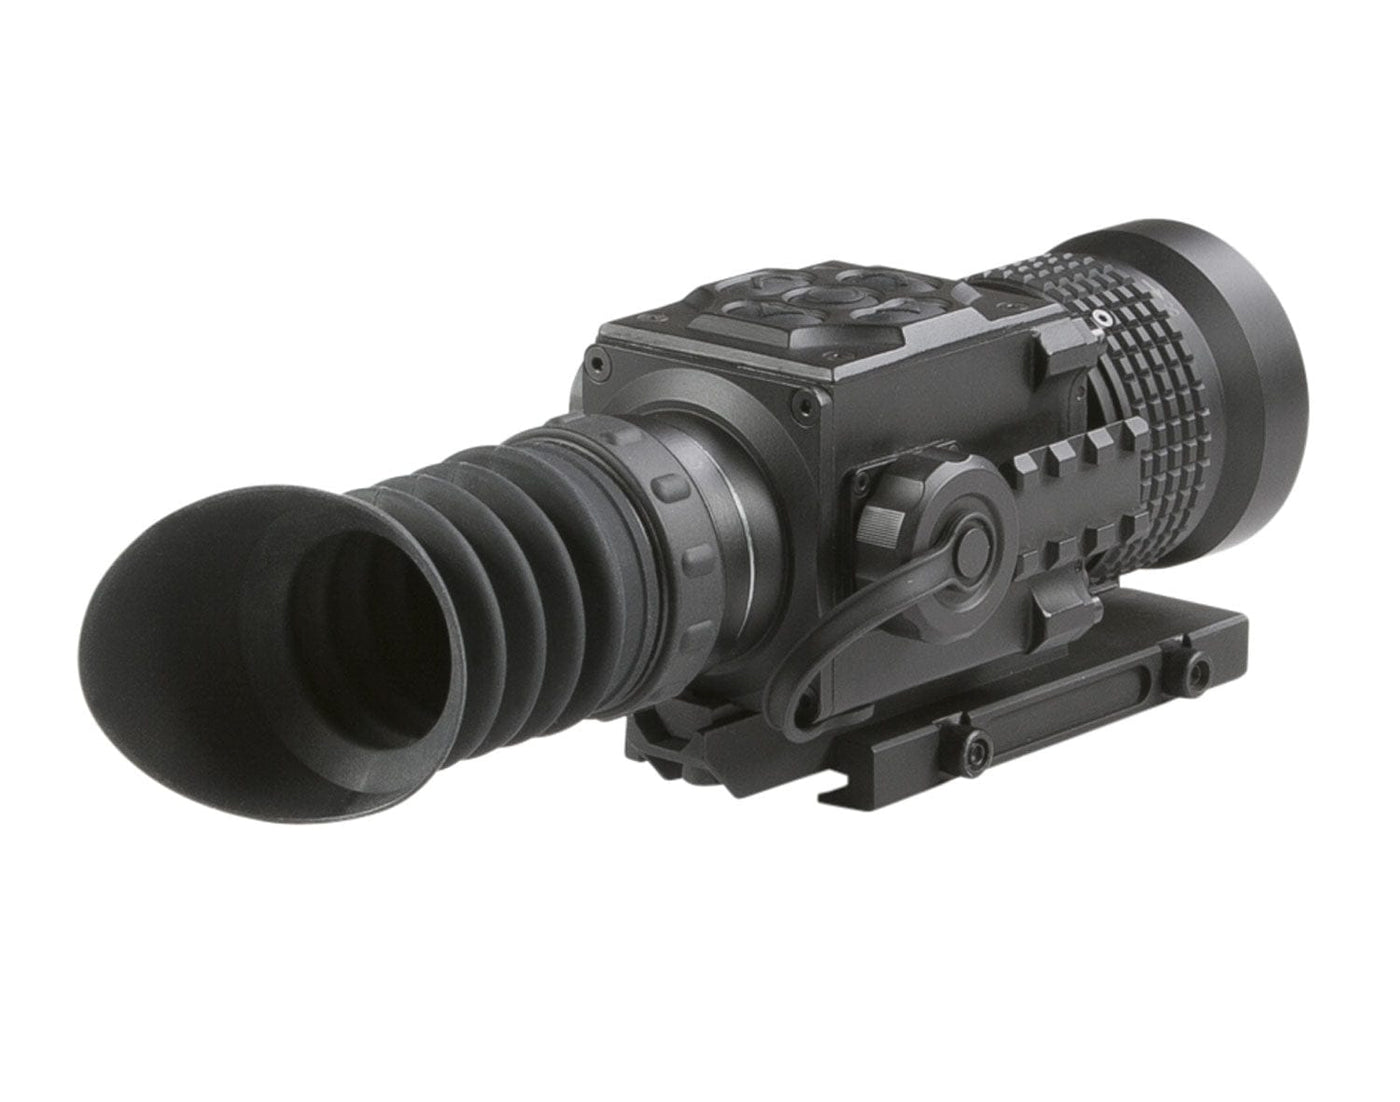 AGM GLOBAL VISION AGM Global Vision Secutor TS50-384 Thermal Riflescope Matte Black 2.4x 50mm Multi-Reticle 384x288 Resolution Digital 1x,2x,4x PIP Zoom Features Rangefinder 3083455006SE51 Optics